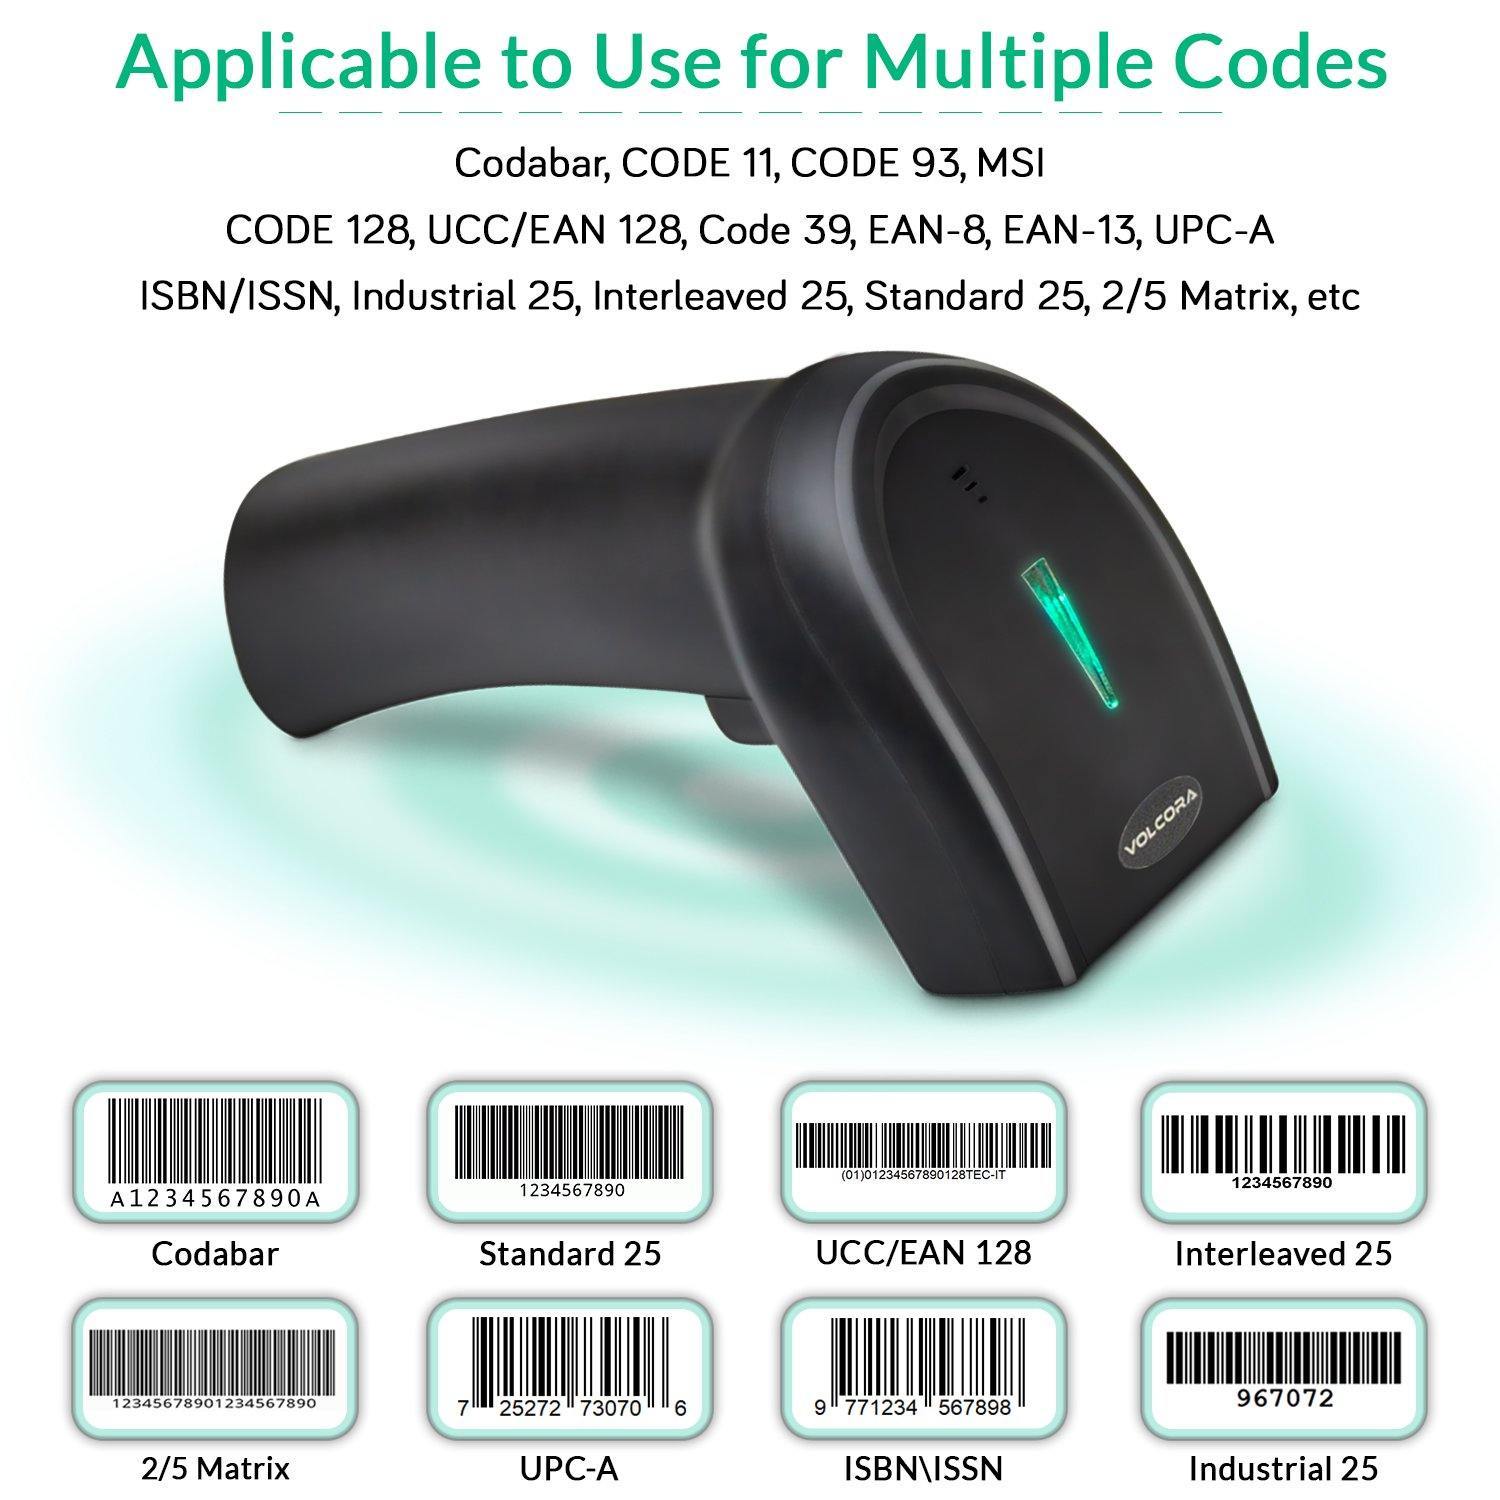 1D Wireless Barcode Scanner - Inbulks